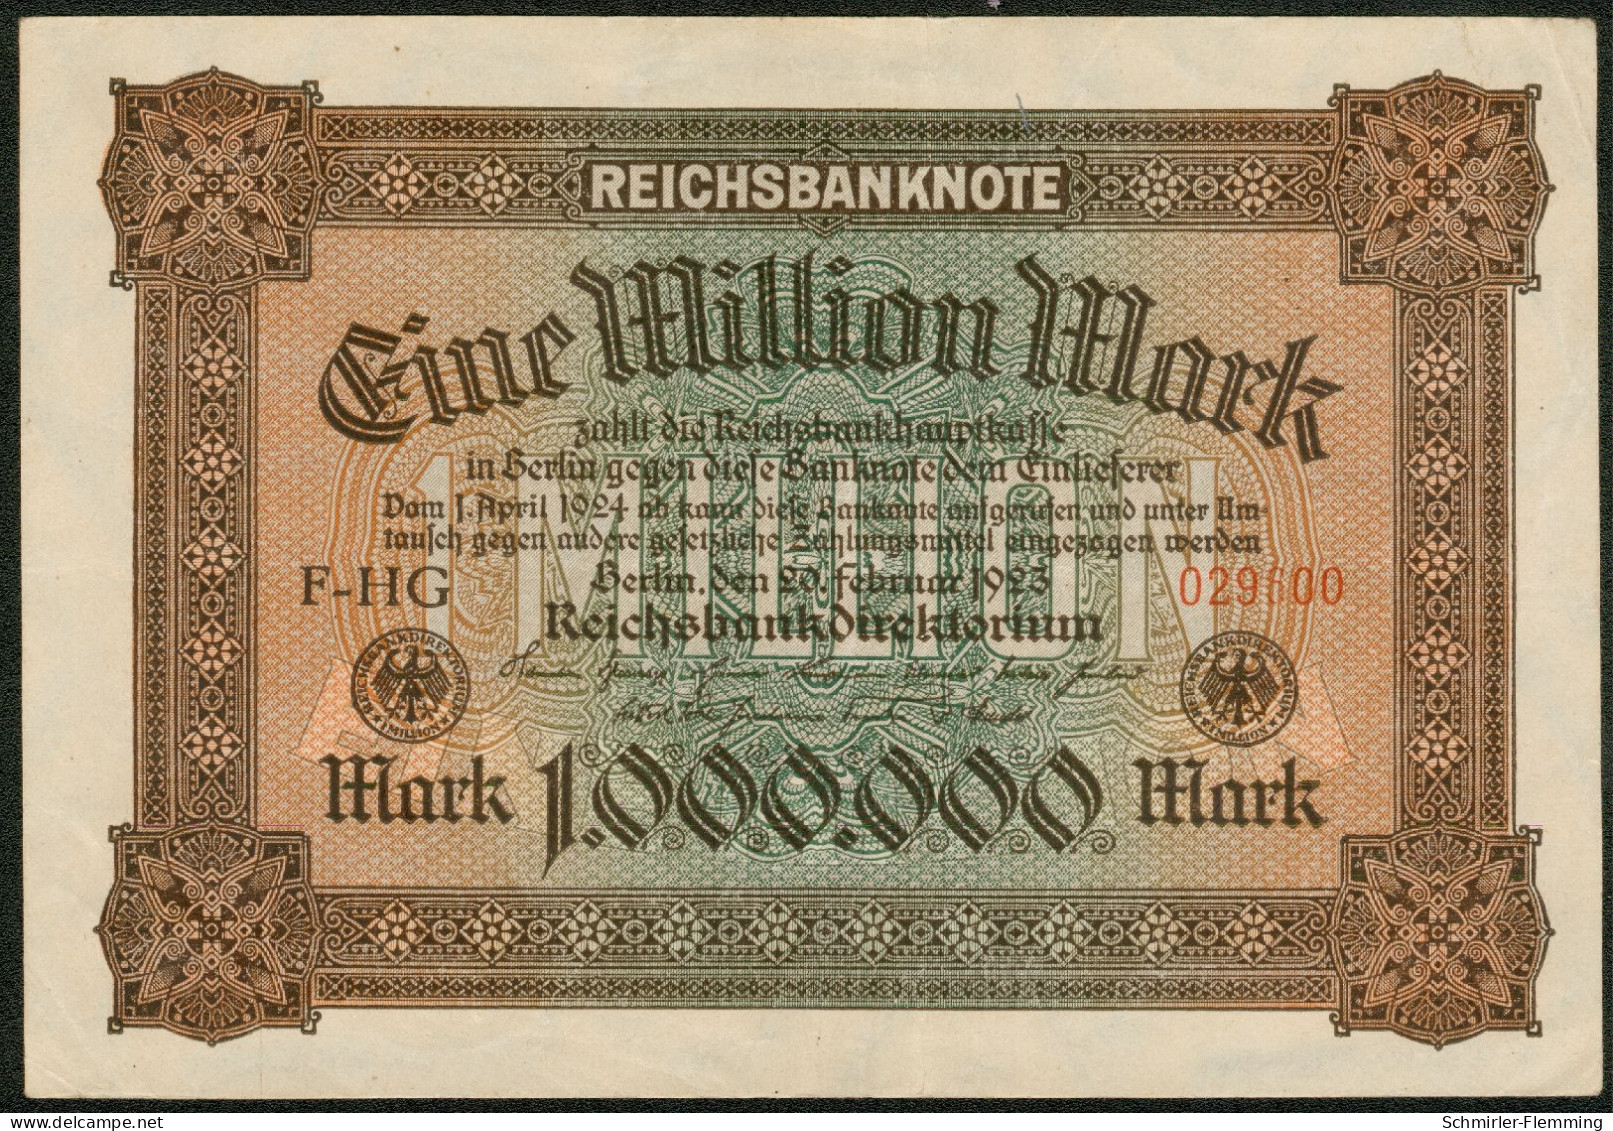 Deutsches Reich 1 Million Mark 20. Feb. 1923 Serie F-HG Rote Kenn Nr.029600(6stellig) KM#86 A, II - 1 Million Mark